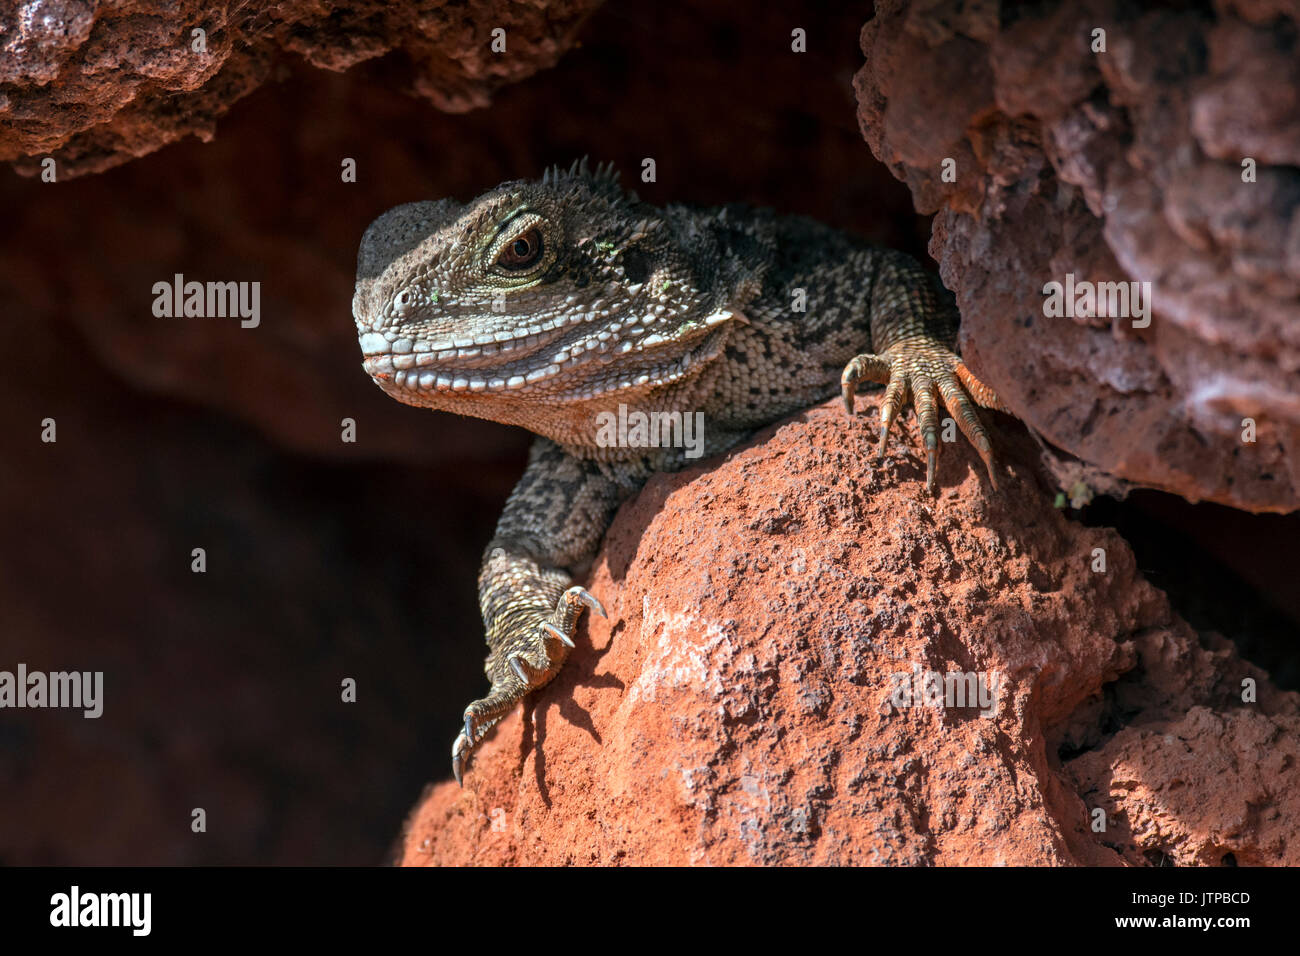 Australian water dragon (Intellagama lesueurii / Physignathus lesueurii) emerging from rock crevice, native to eastern Australia Stock Photo